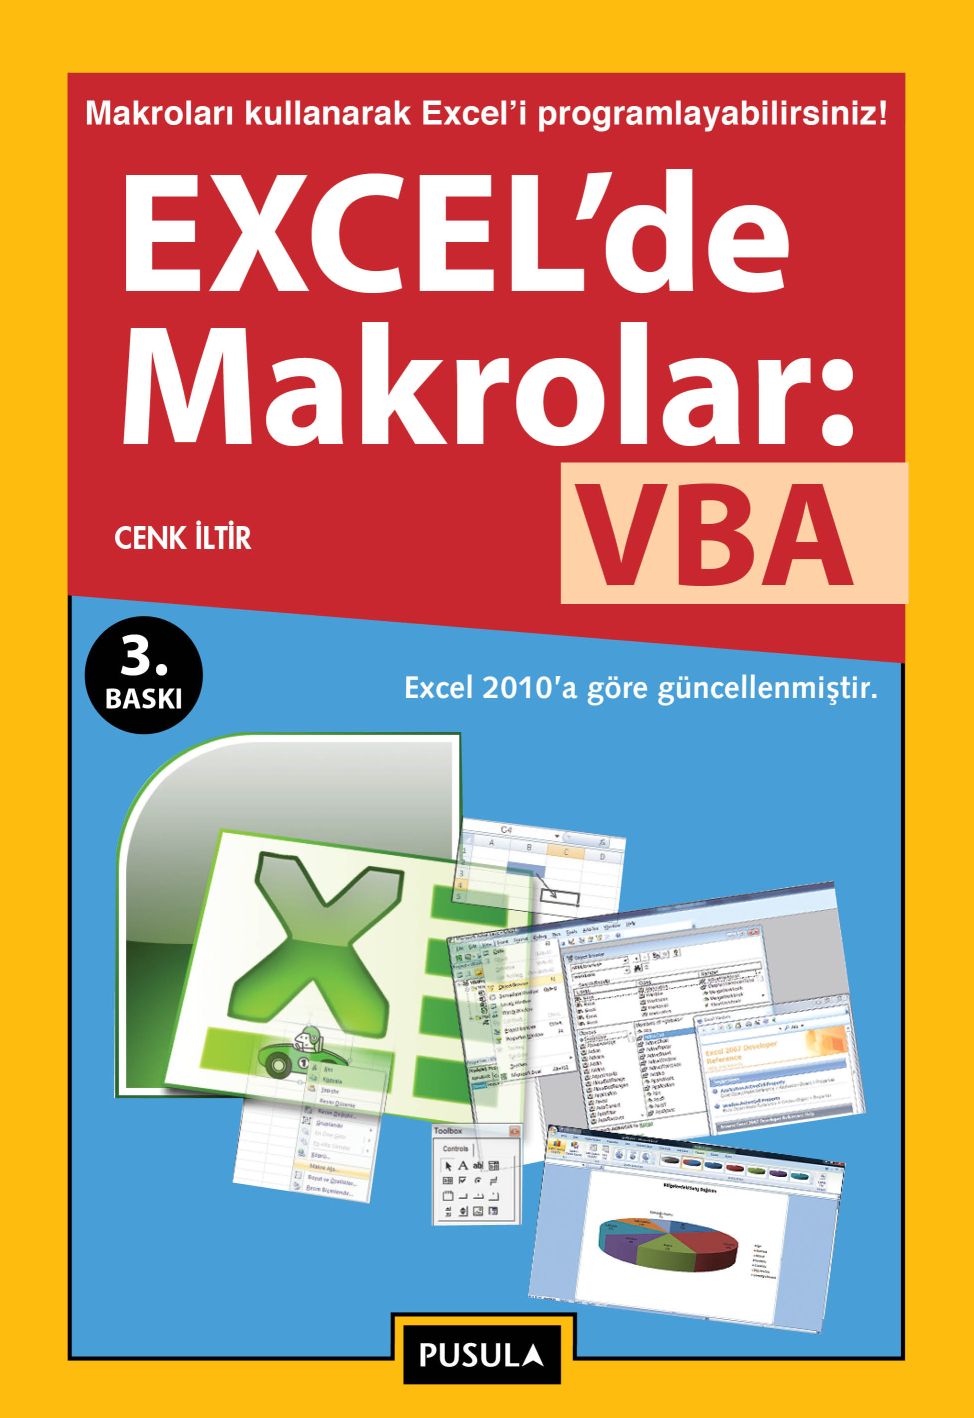 Excel'de Makrolar VBA